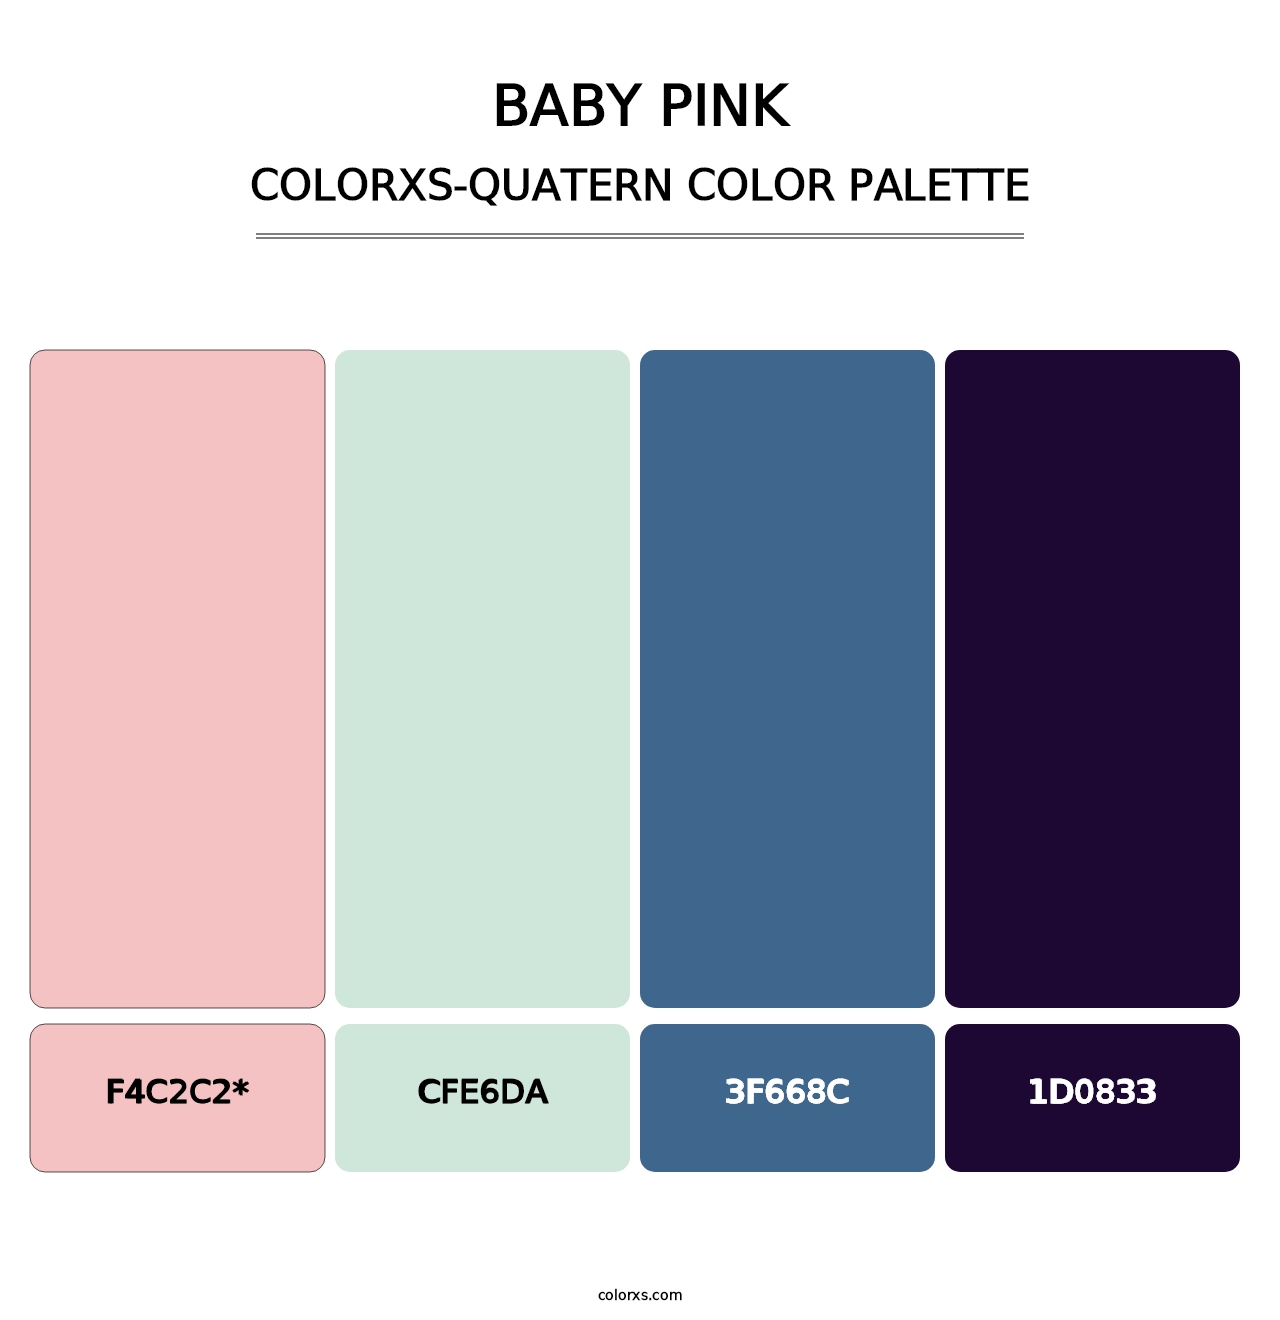 Baby Pink - Colorxs Quad Palette